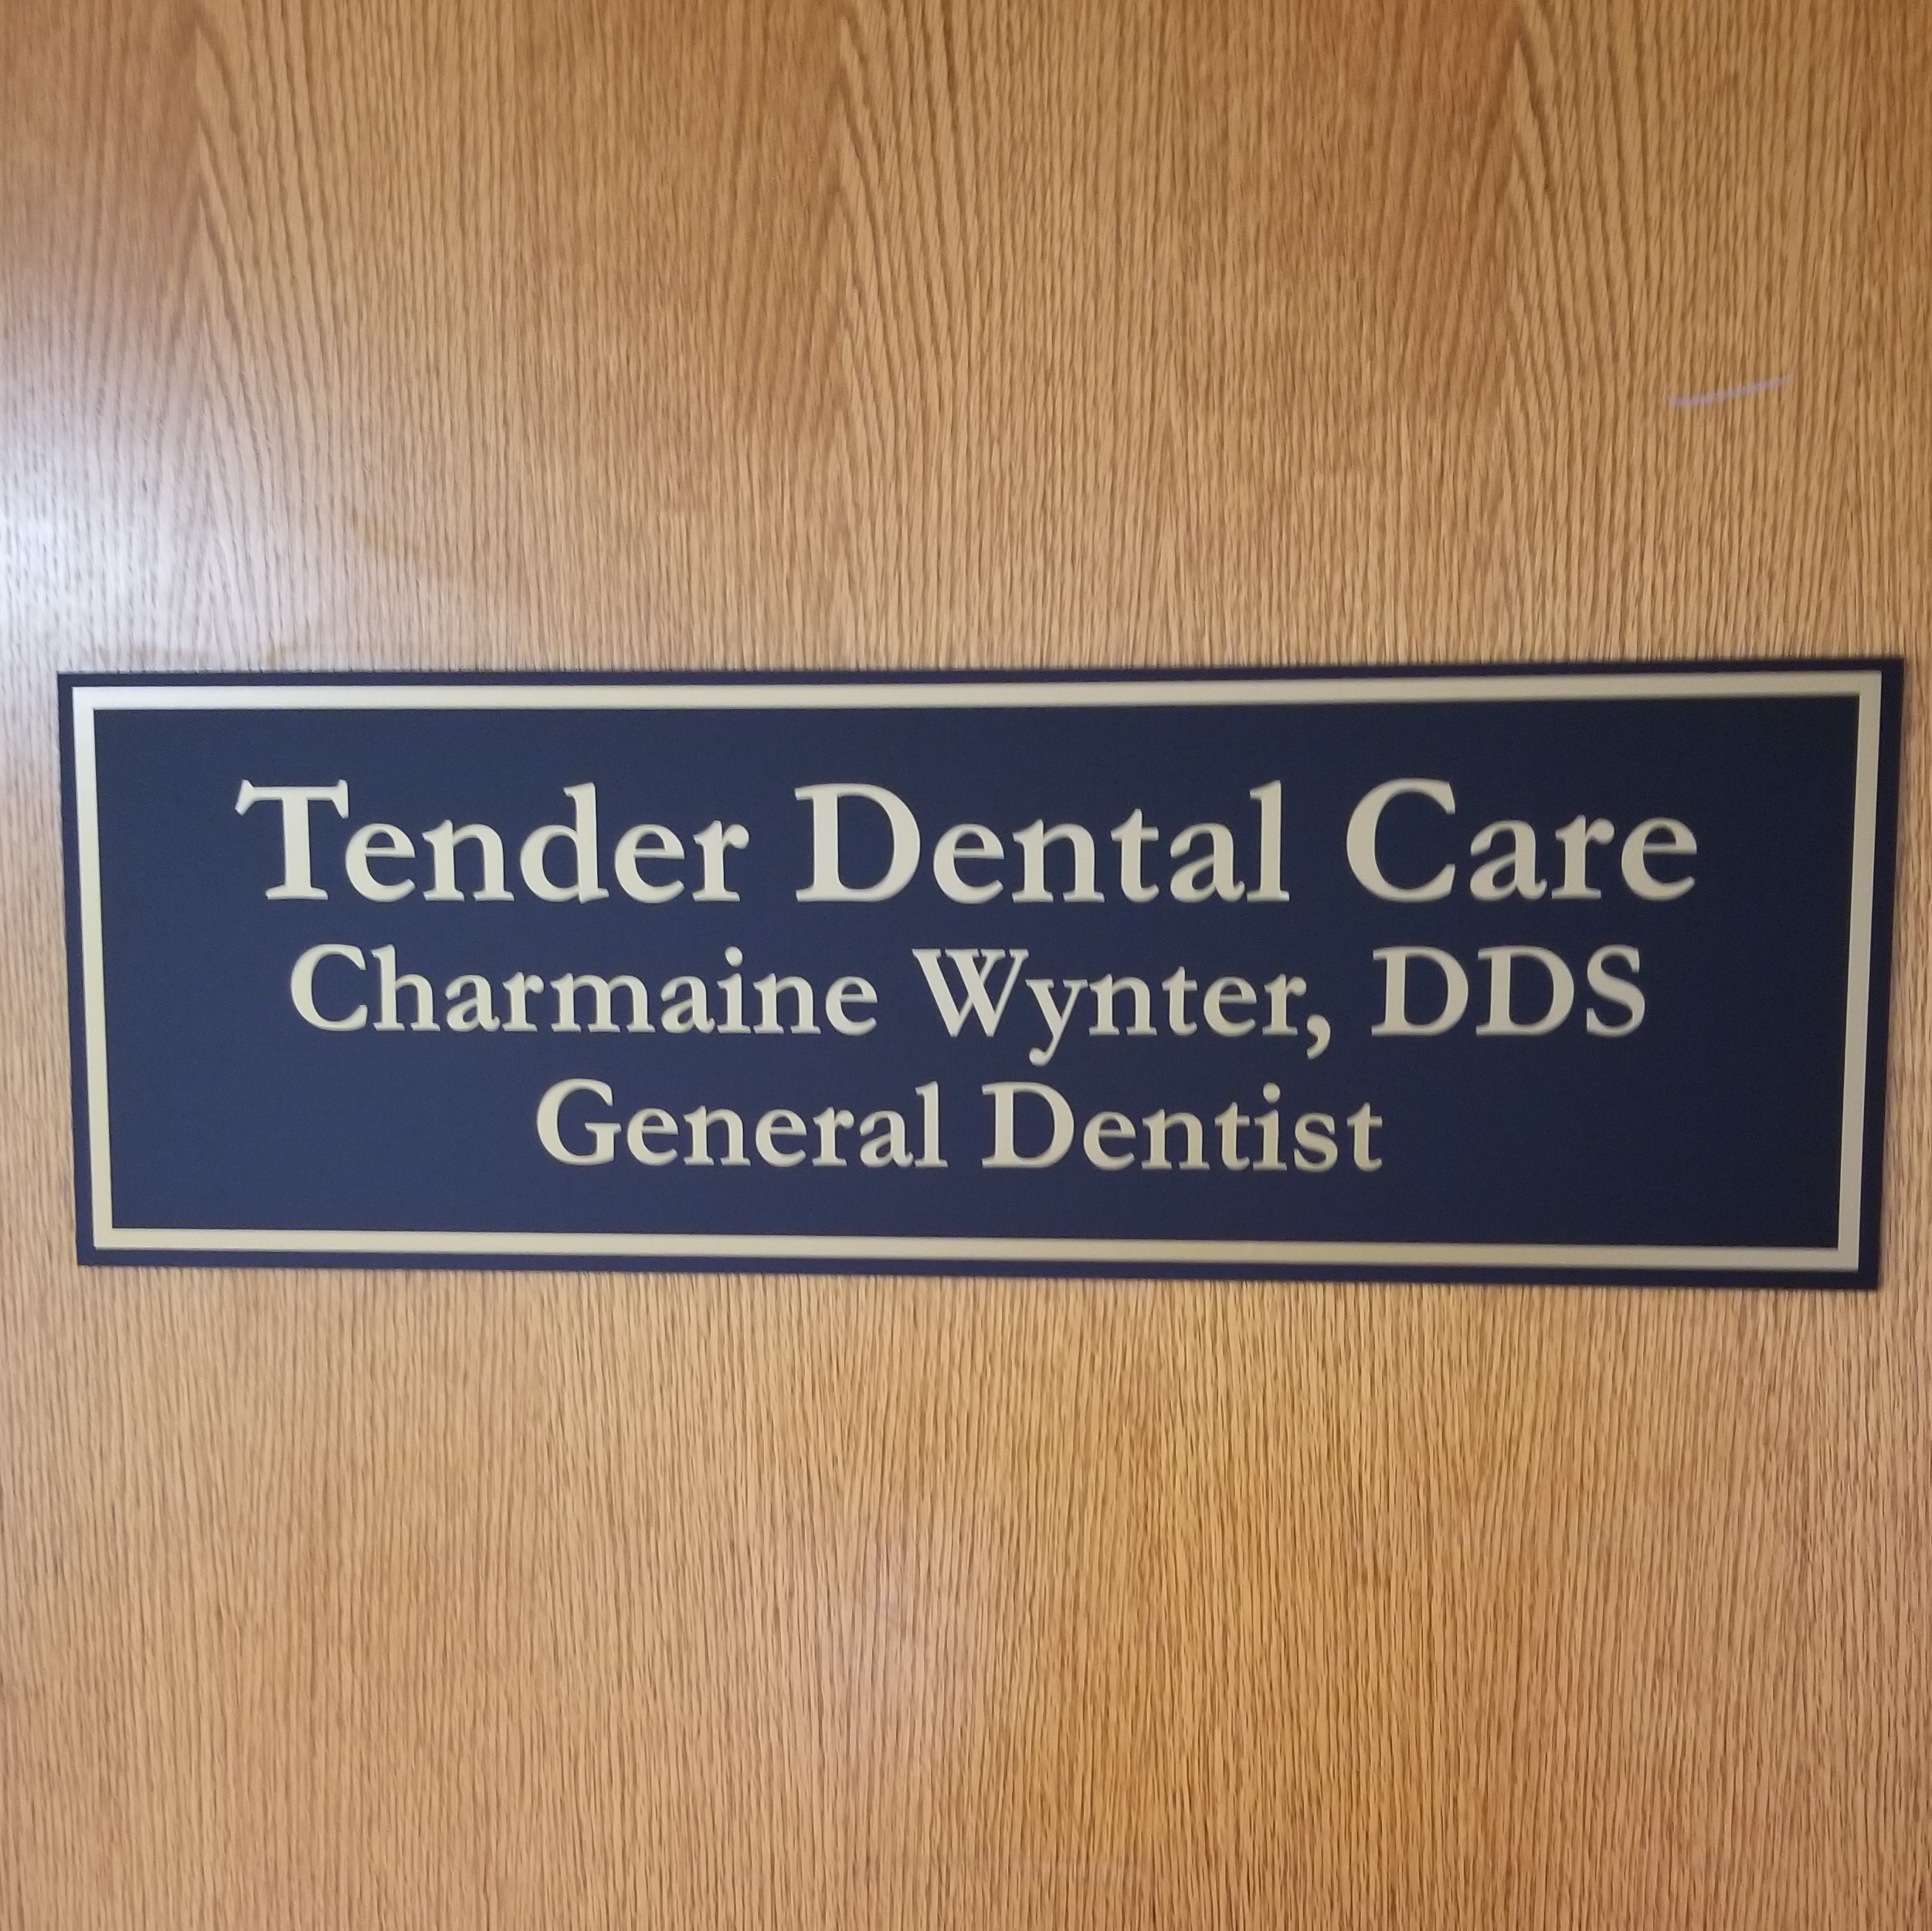 Tender Dental Care
Charmaine Wynter, DDS
General Dentist Tender Dental Care Fort Washington (301)203-3944